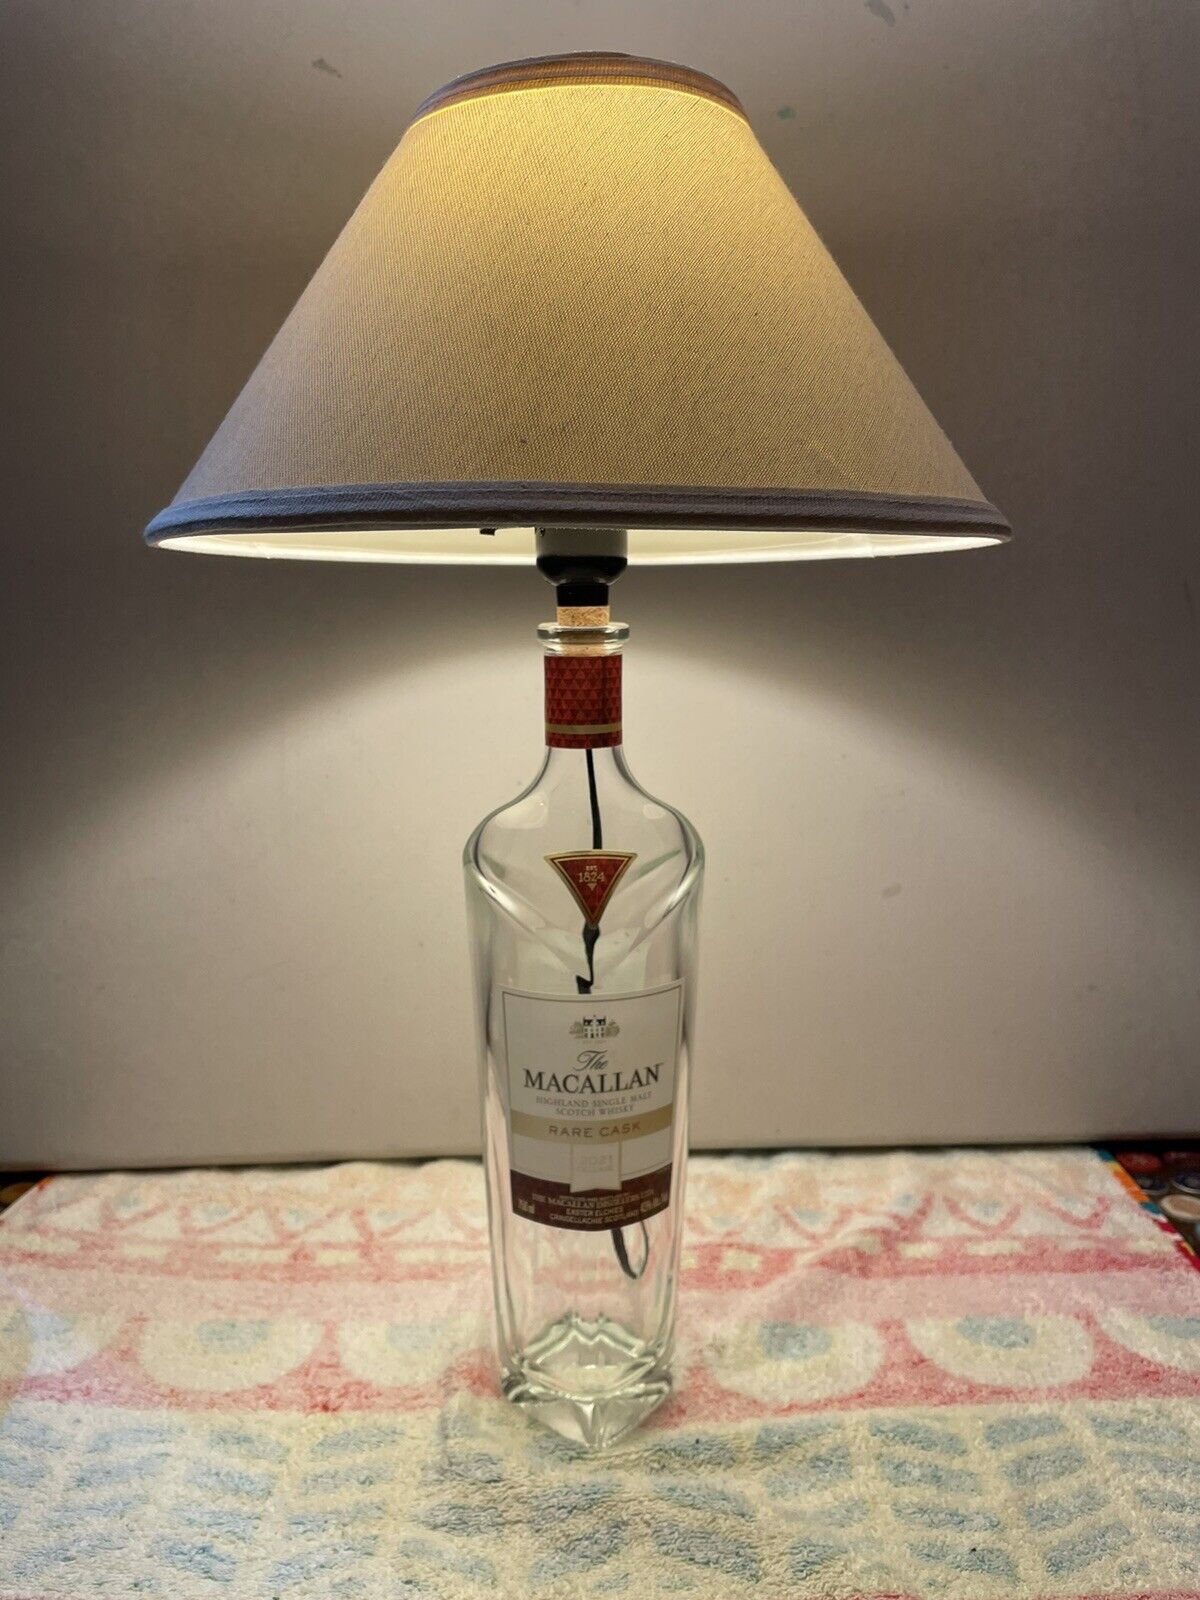 the macallan rare cask 2021 lamp